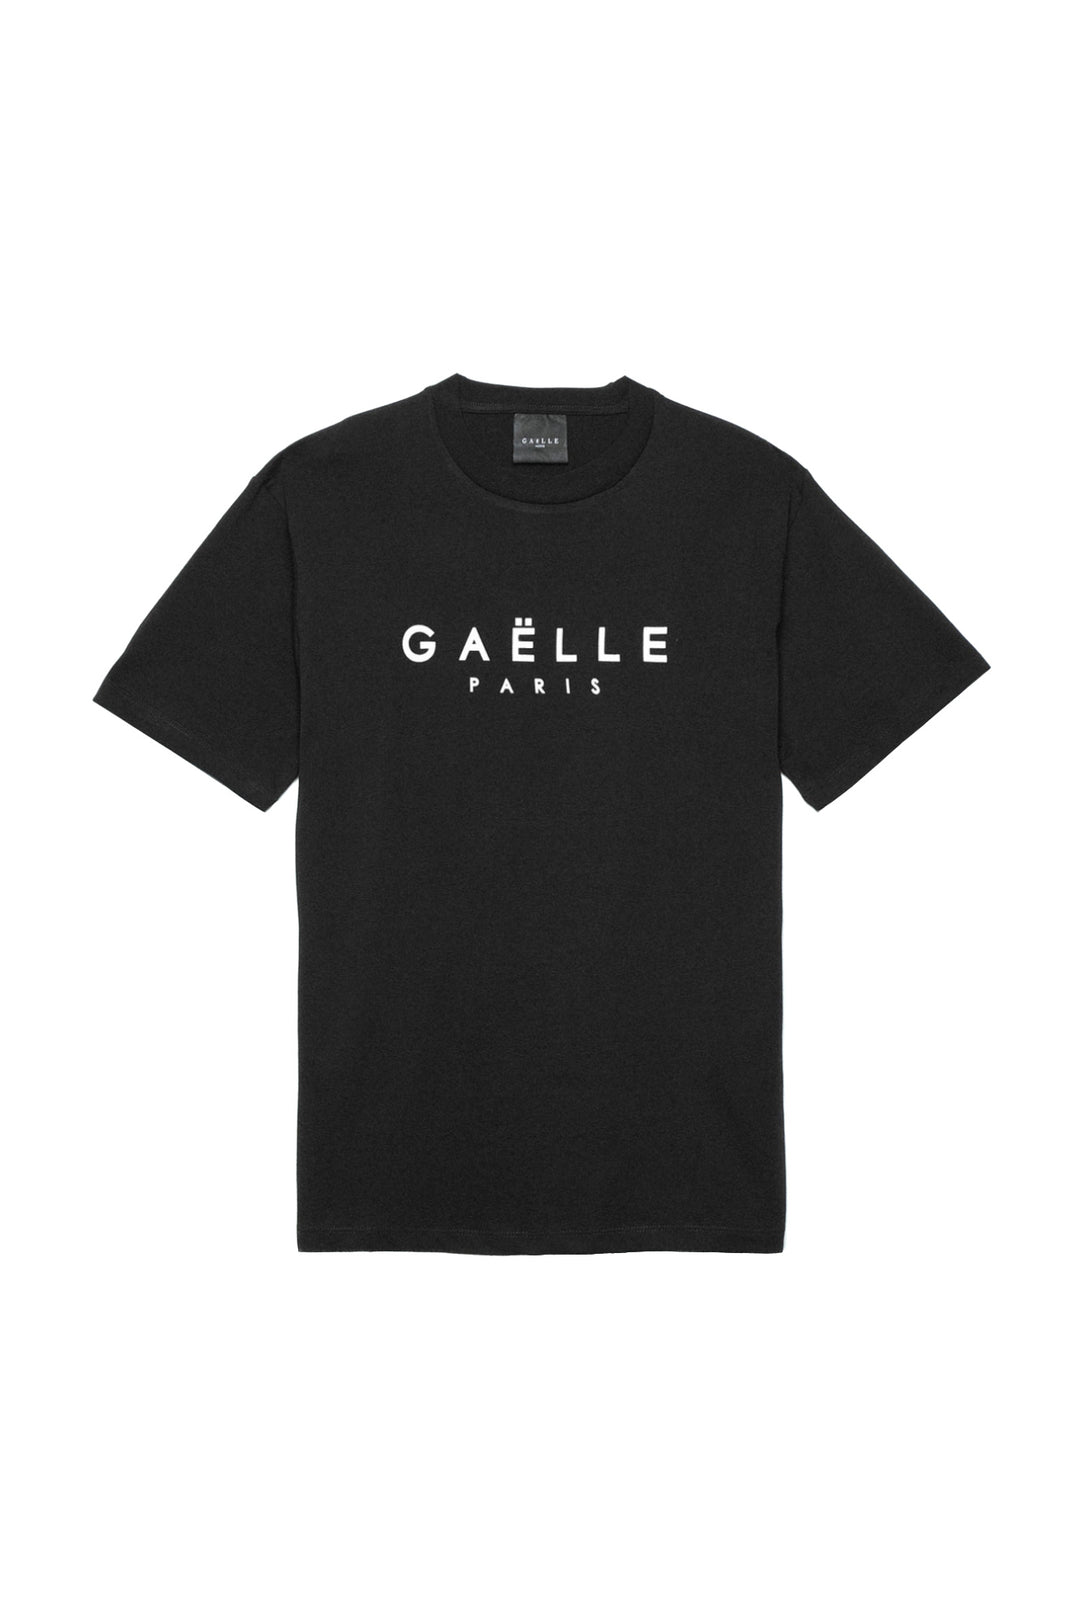 GAELLE T-Shirt Nera In Jersey Con Stampa - Mancinelli 1954